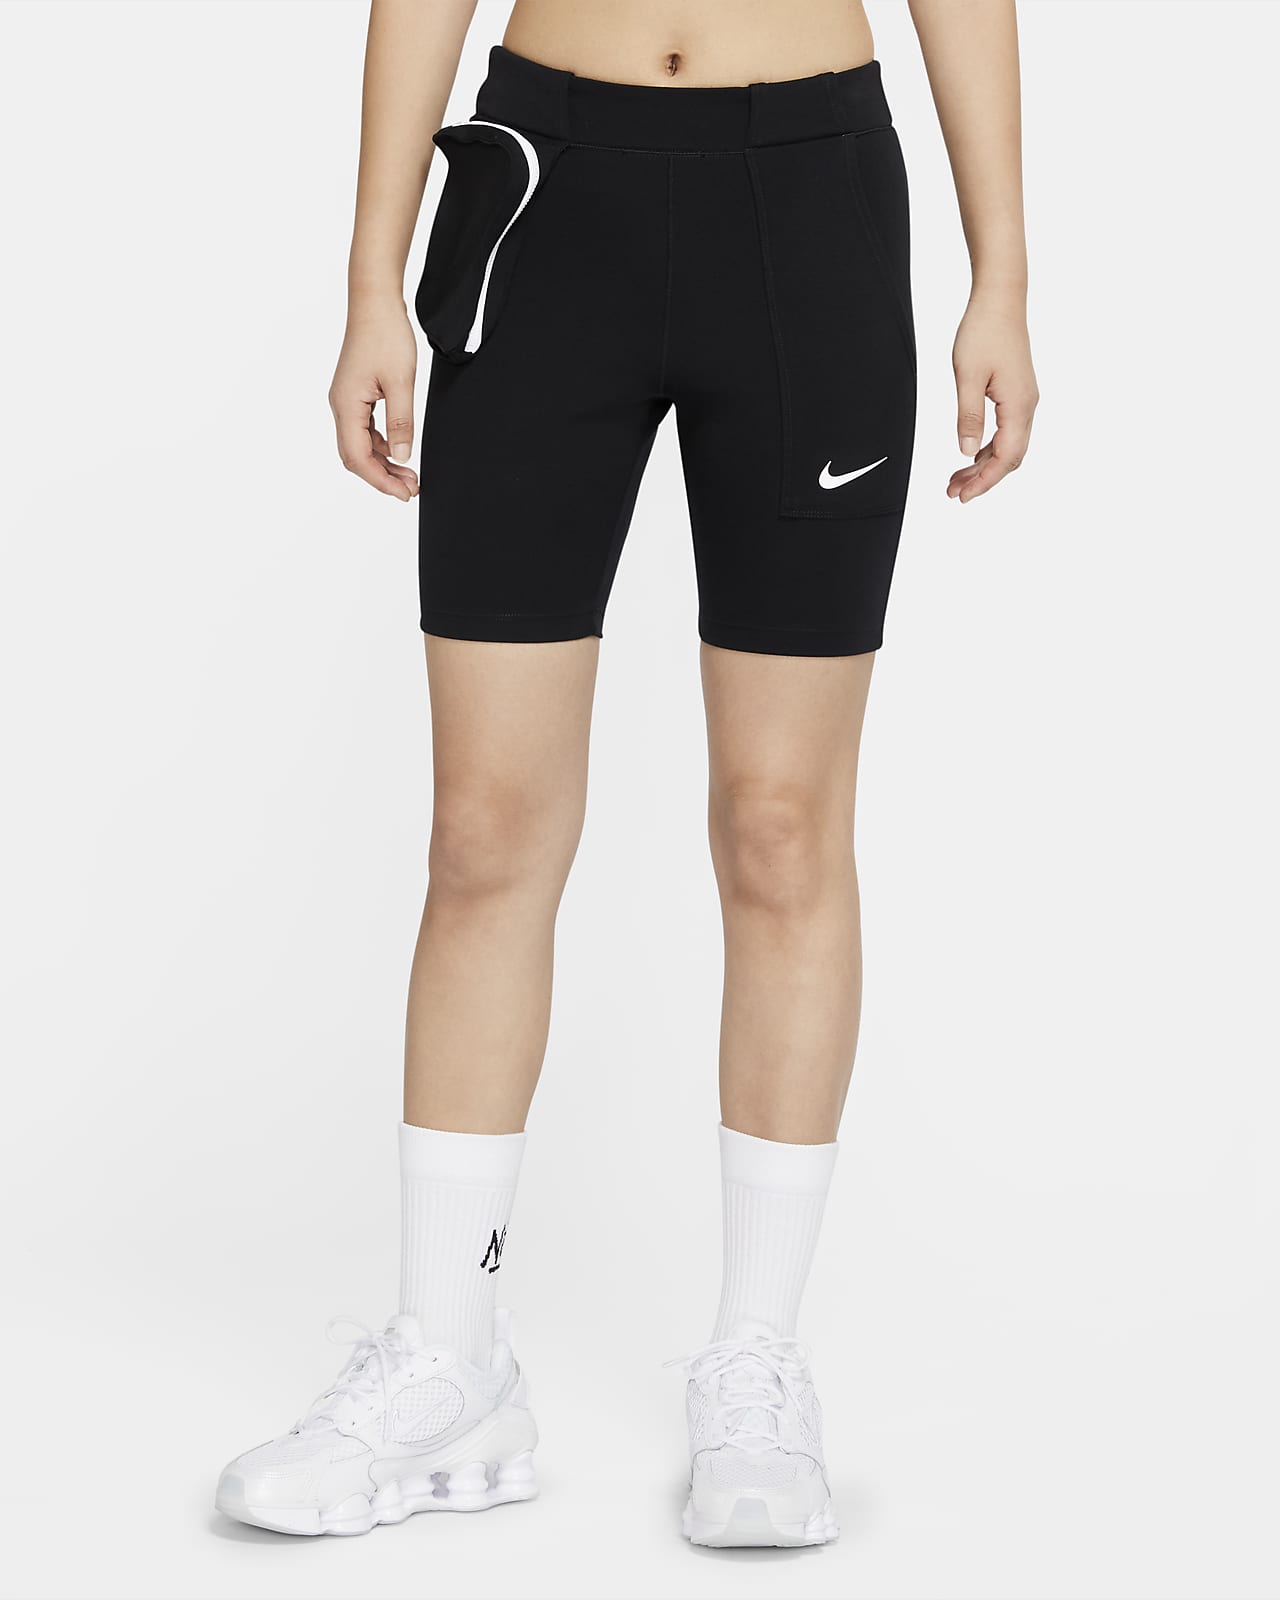 nike shorts with cycling shorts